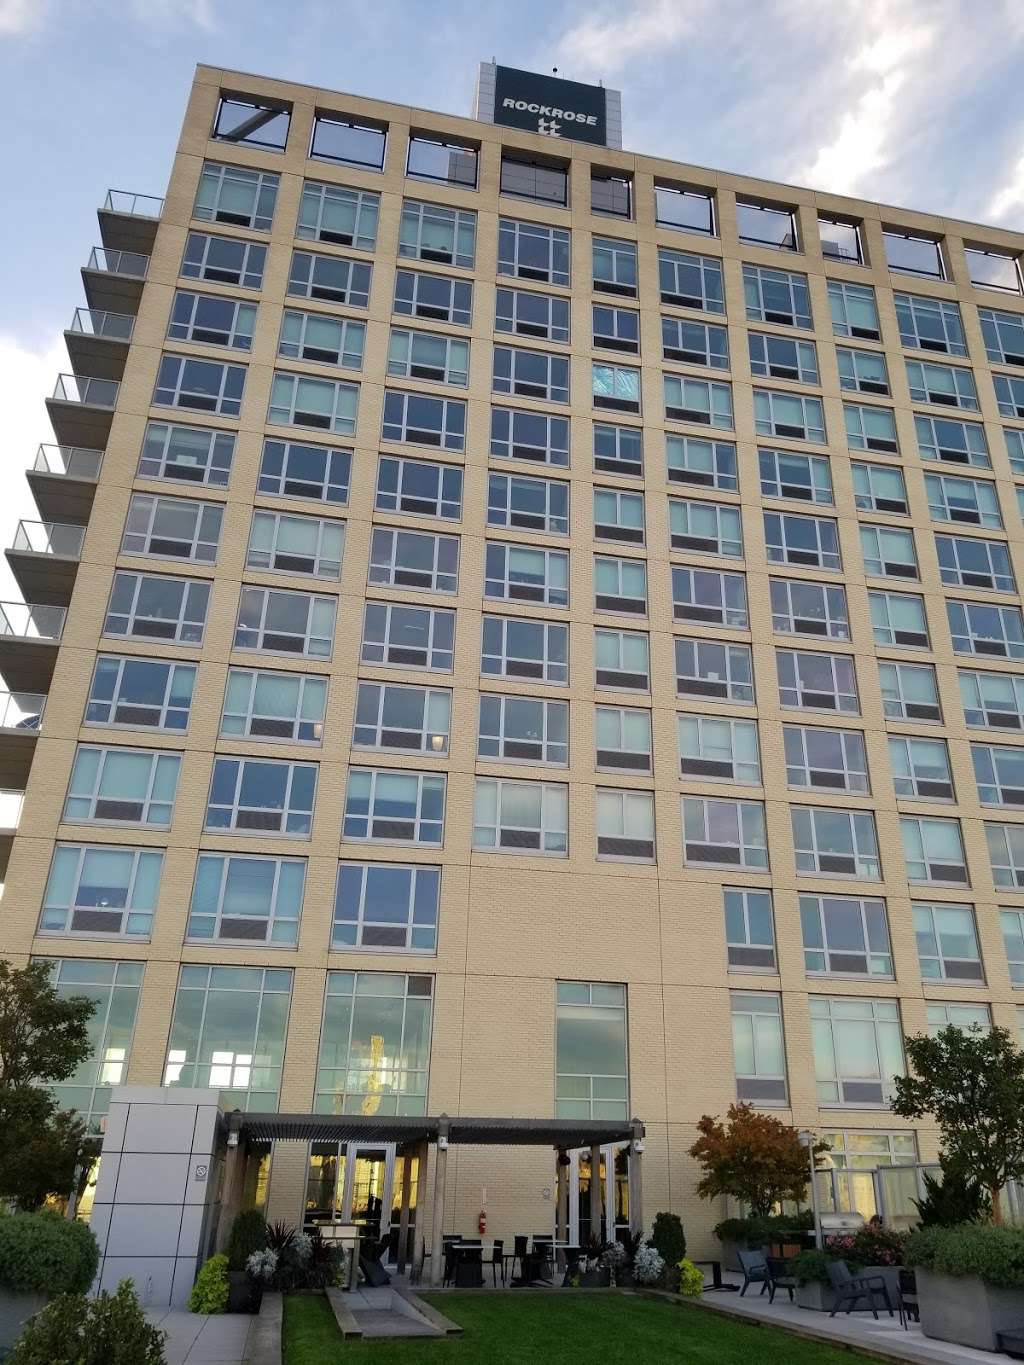 Linc LIC Apartments by Rockrose | Photo 2 of 10 | Address: 43-10 Crescent Street, Leasing Office Lobby Level, Long Island City, NY 11101, USA | Phone: (718) 440-3333